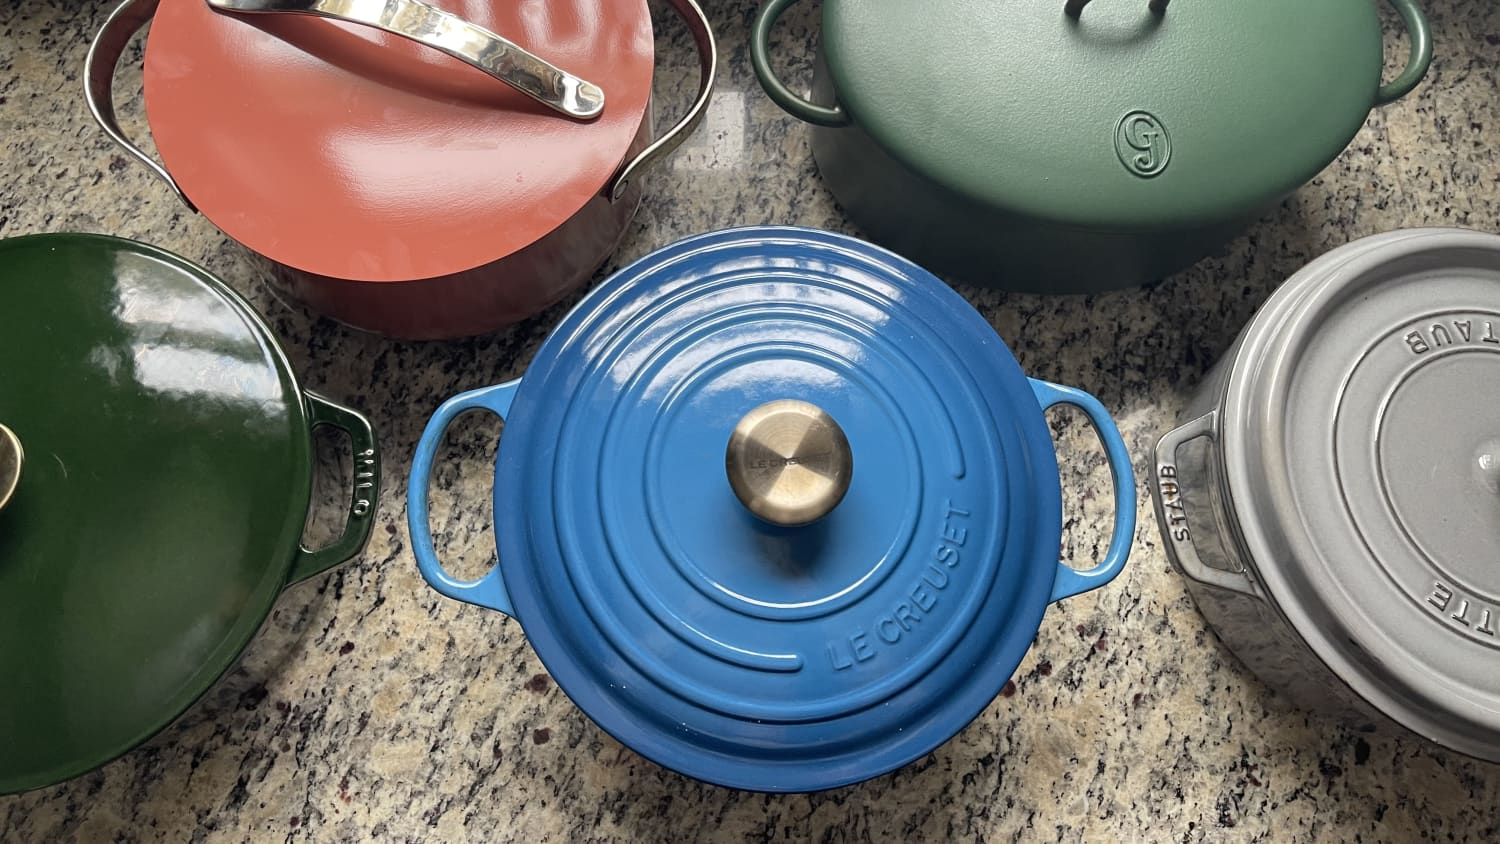 6 qt. Pampered Chef Dutch Oven (Blue)